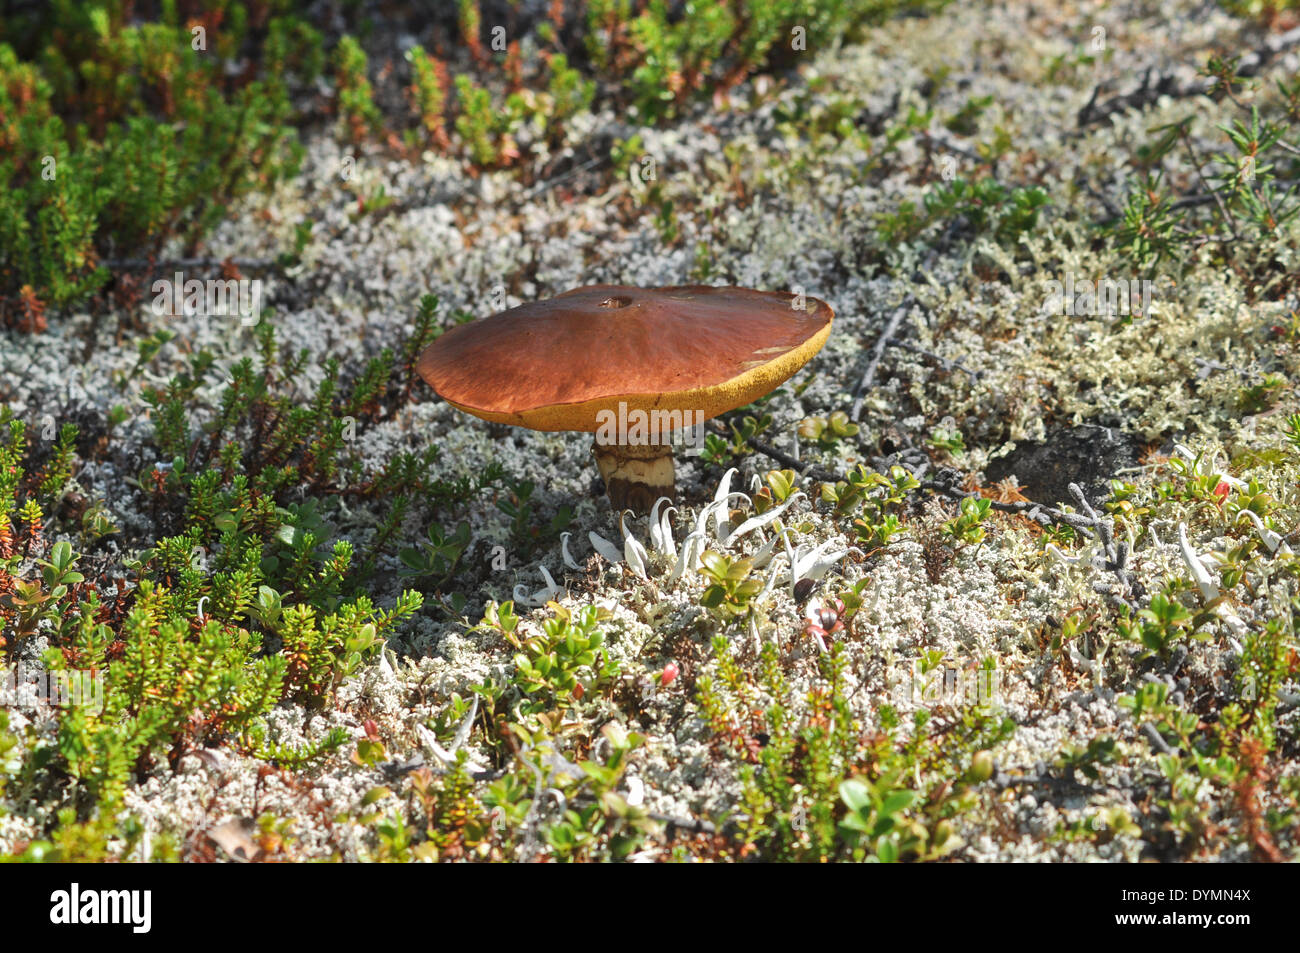 Russia, Yakutia. Wild mushrooms among soil, covered with moss and pine needles. Stock Photo